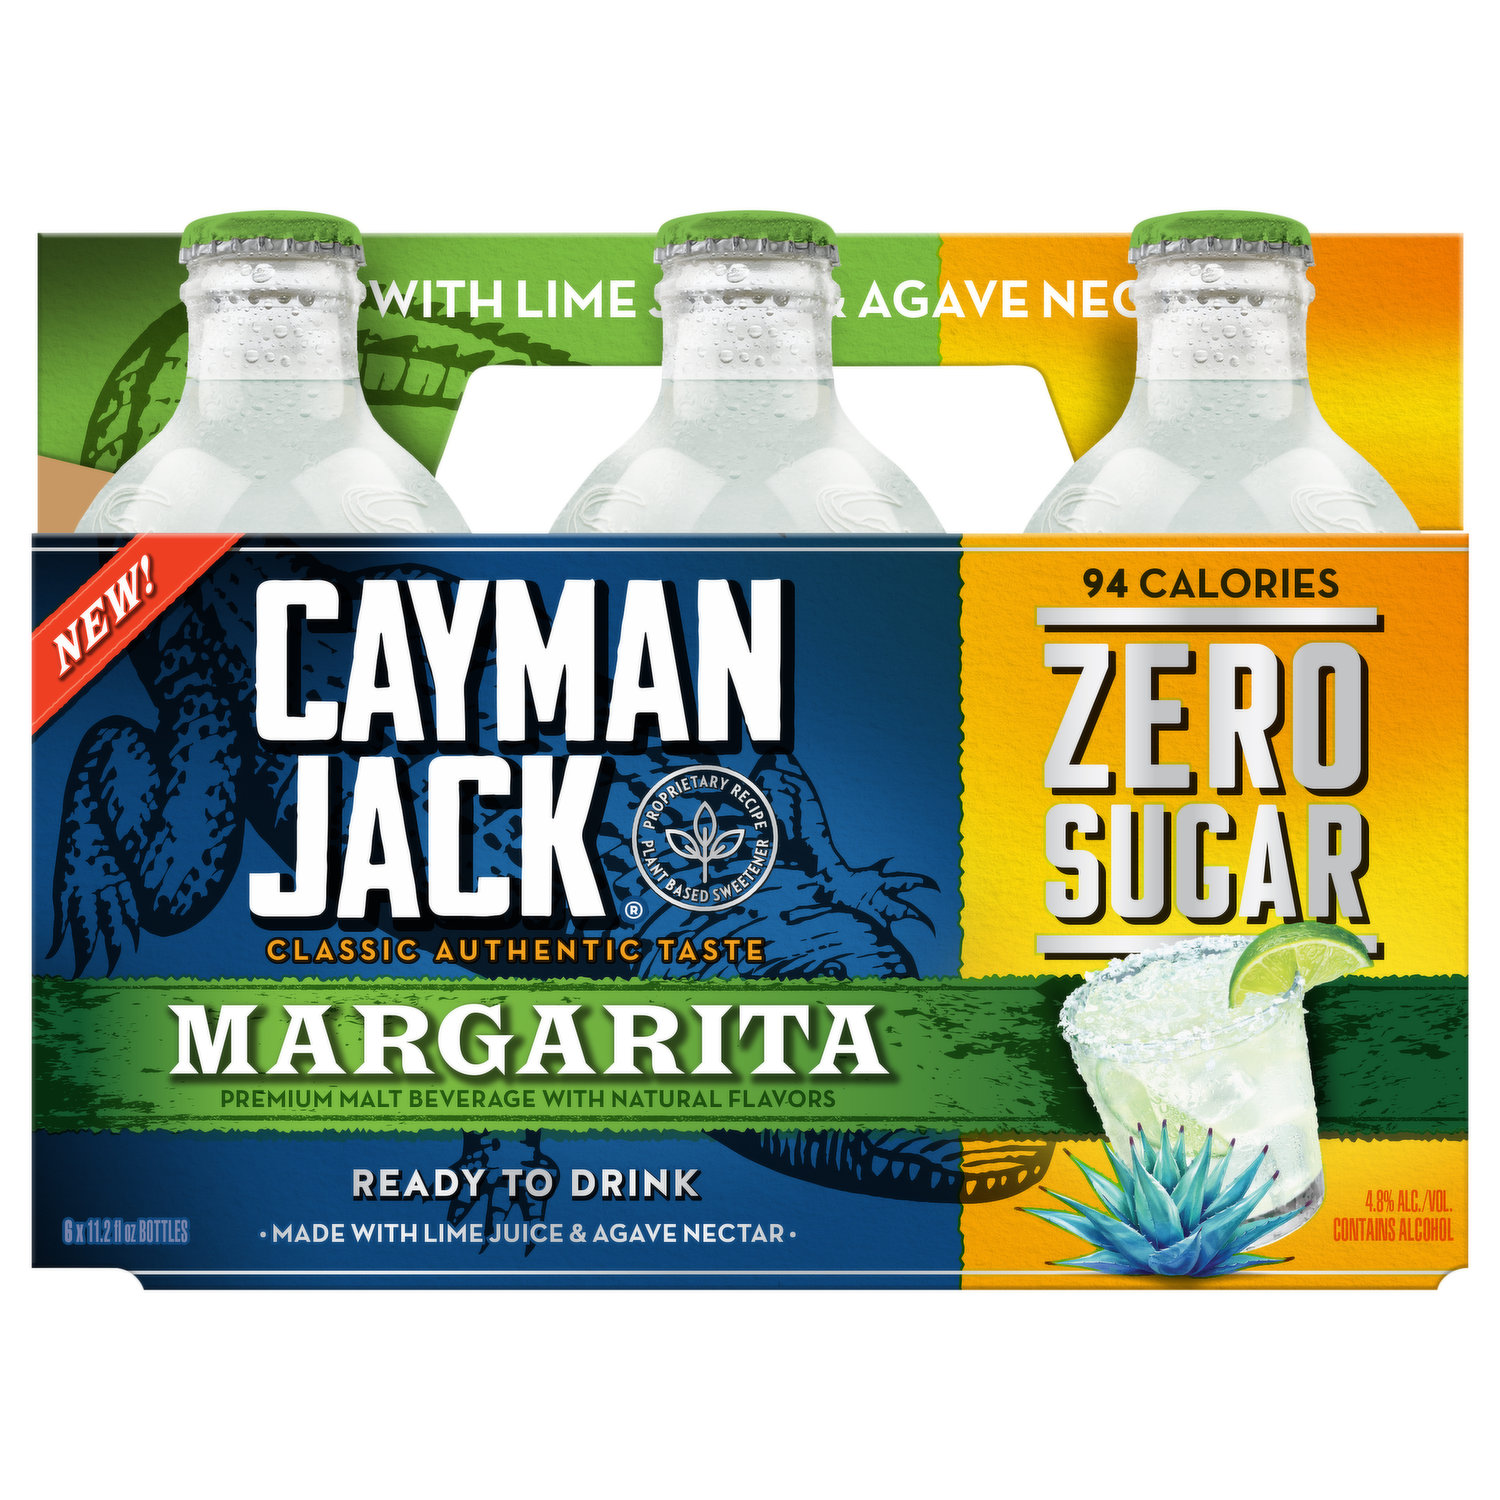 cayman-jack-zero-sugar-sampling-finley-beer